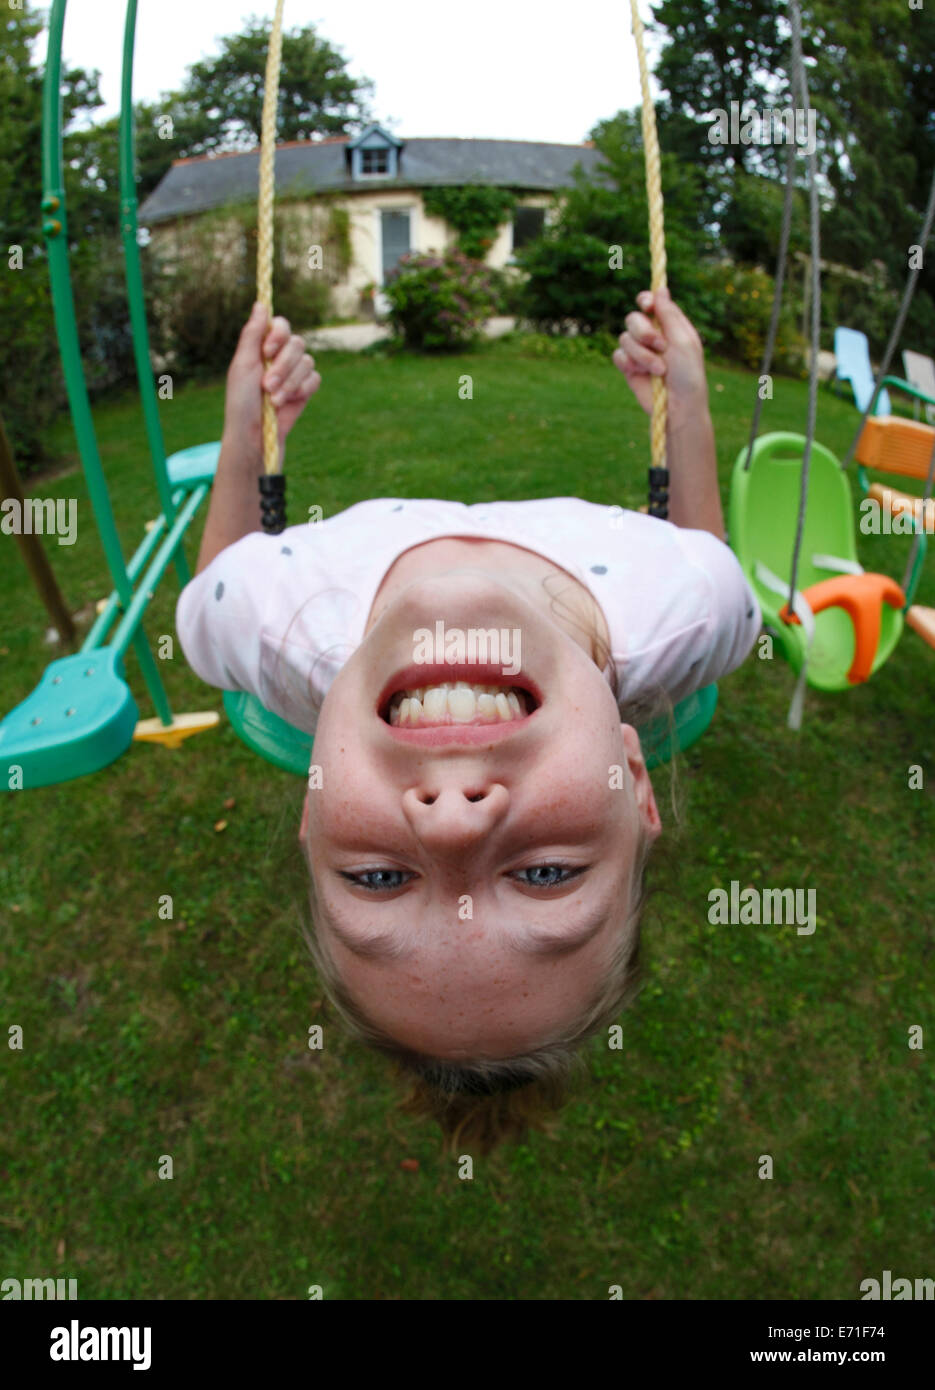 child on a swing swinging upside down Stock Photo